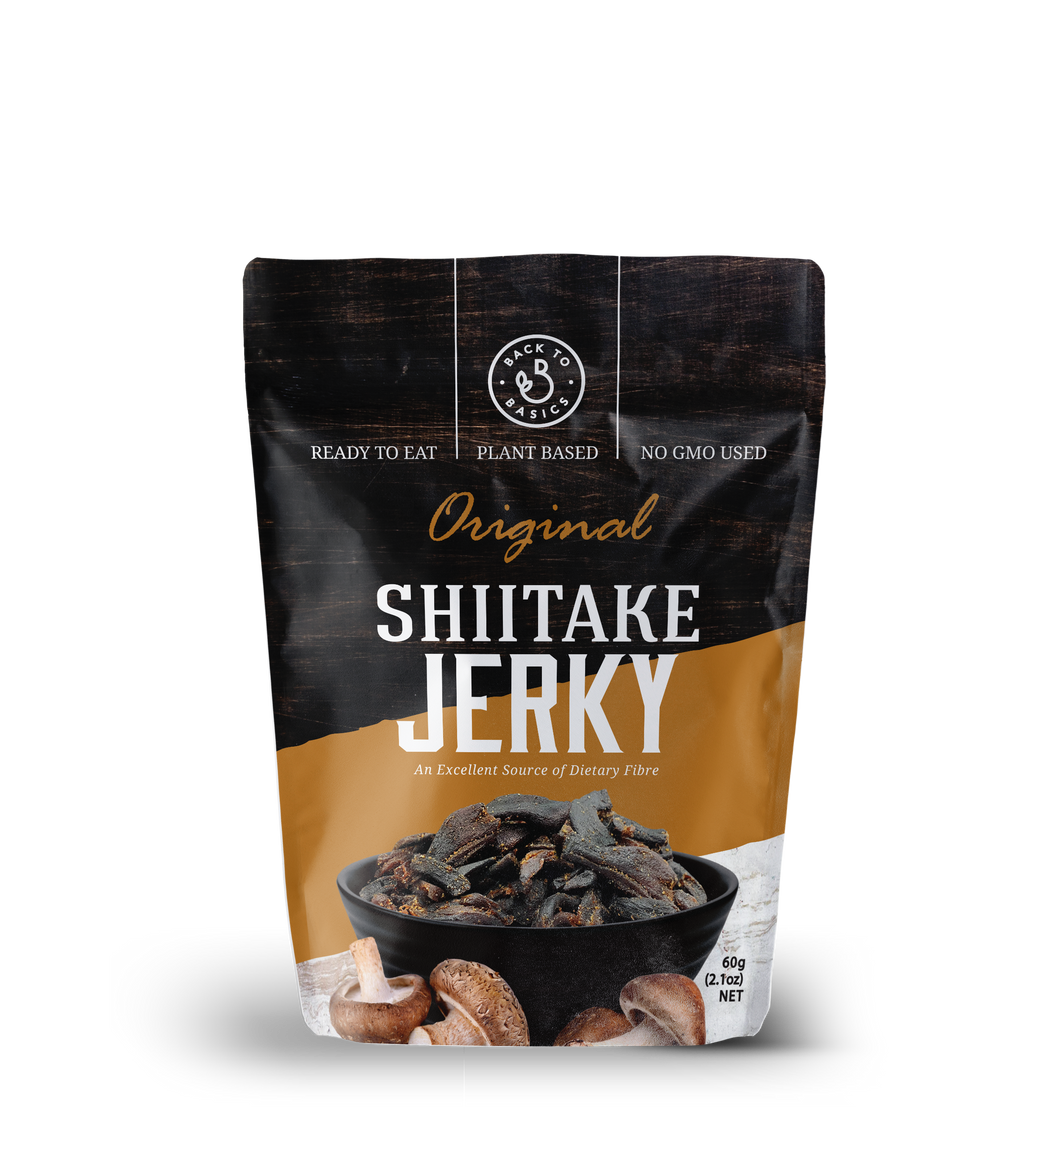 Shiitake Jerky, Original 60g